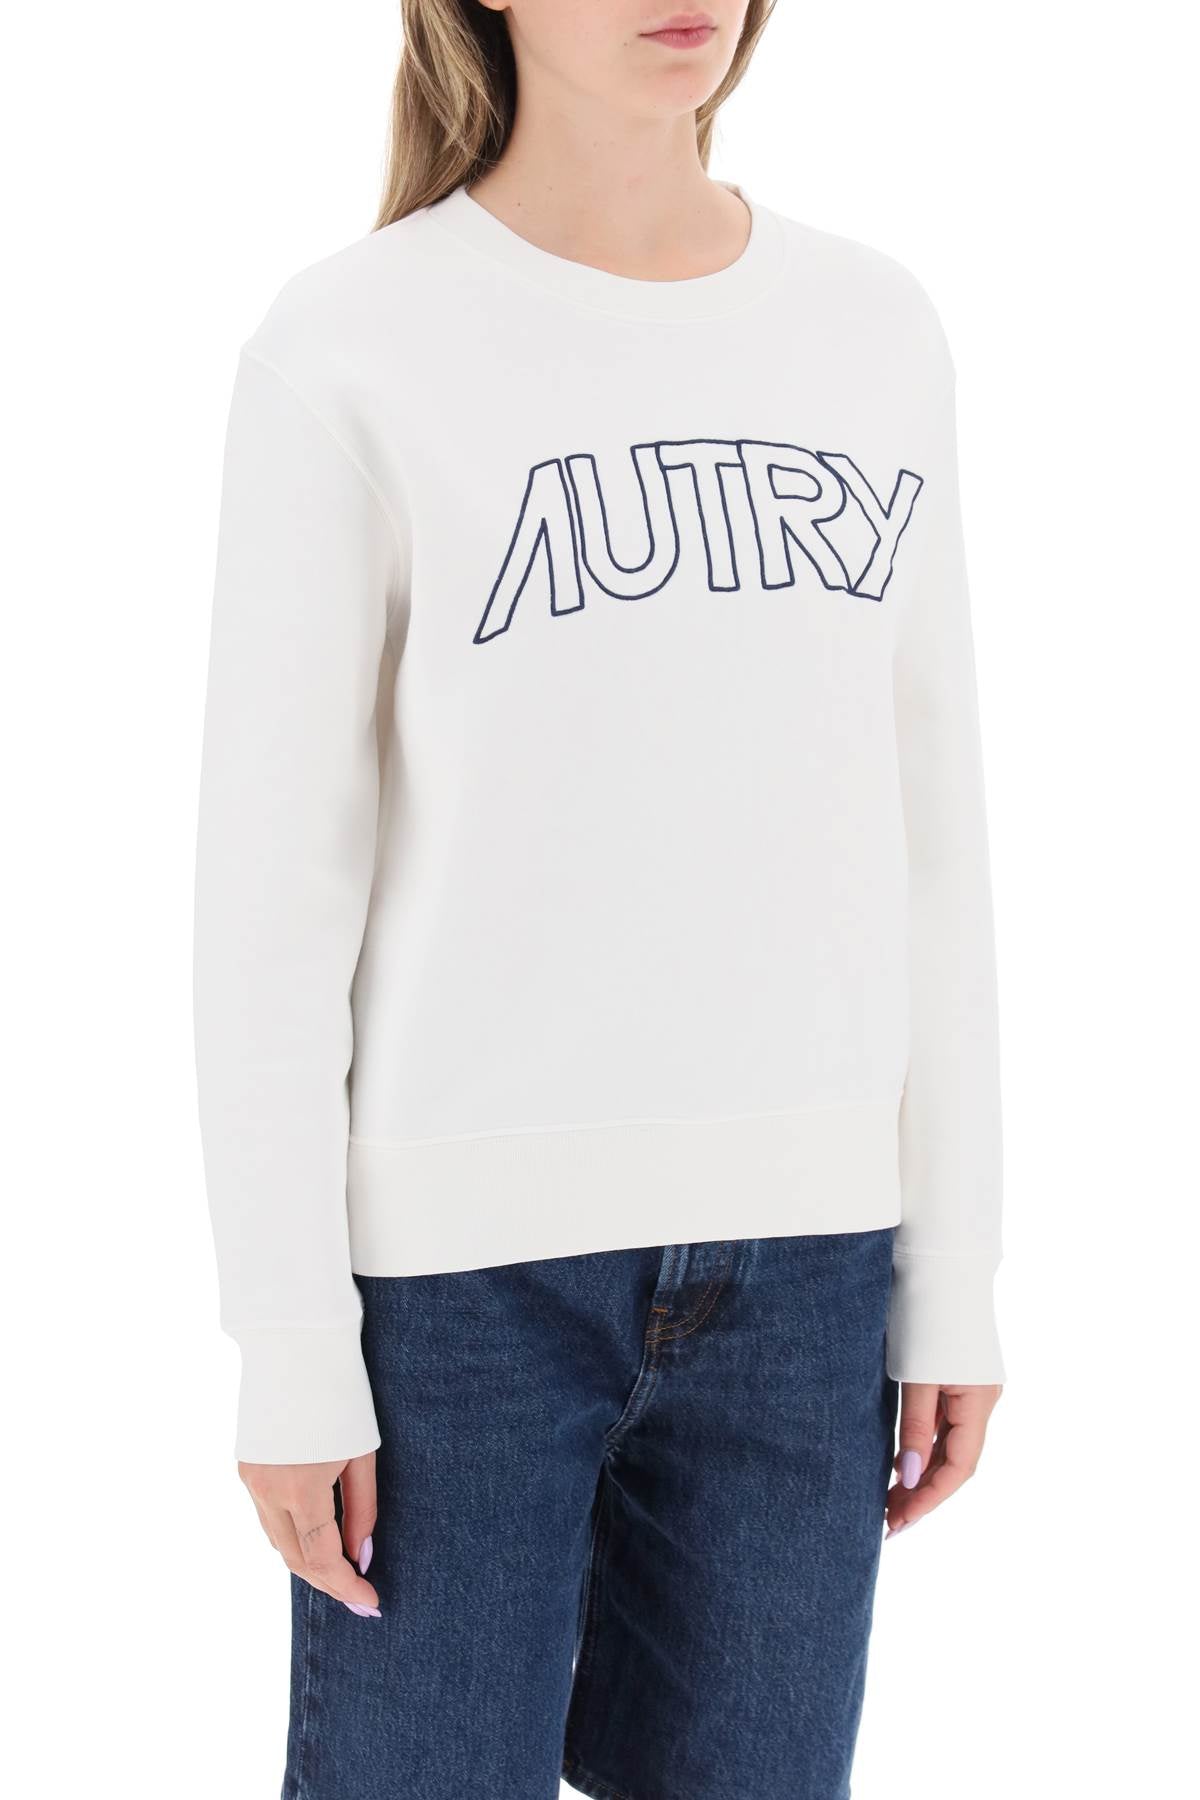 Autry embroidered logo sweatshirt-1